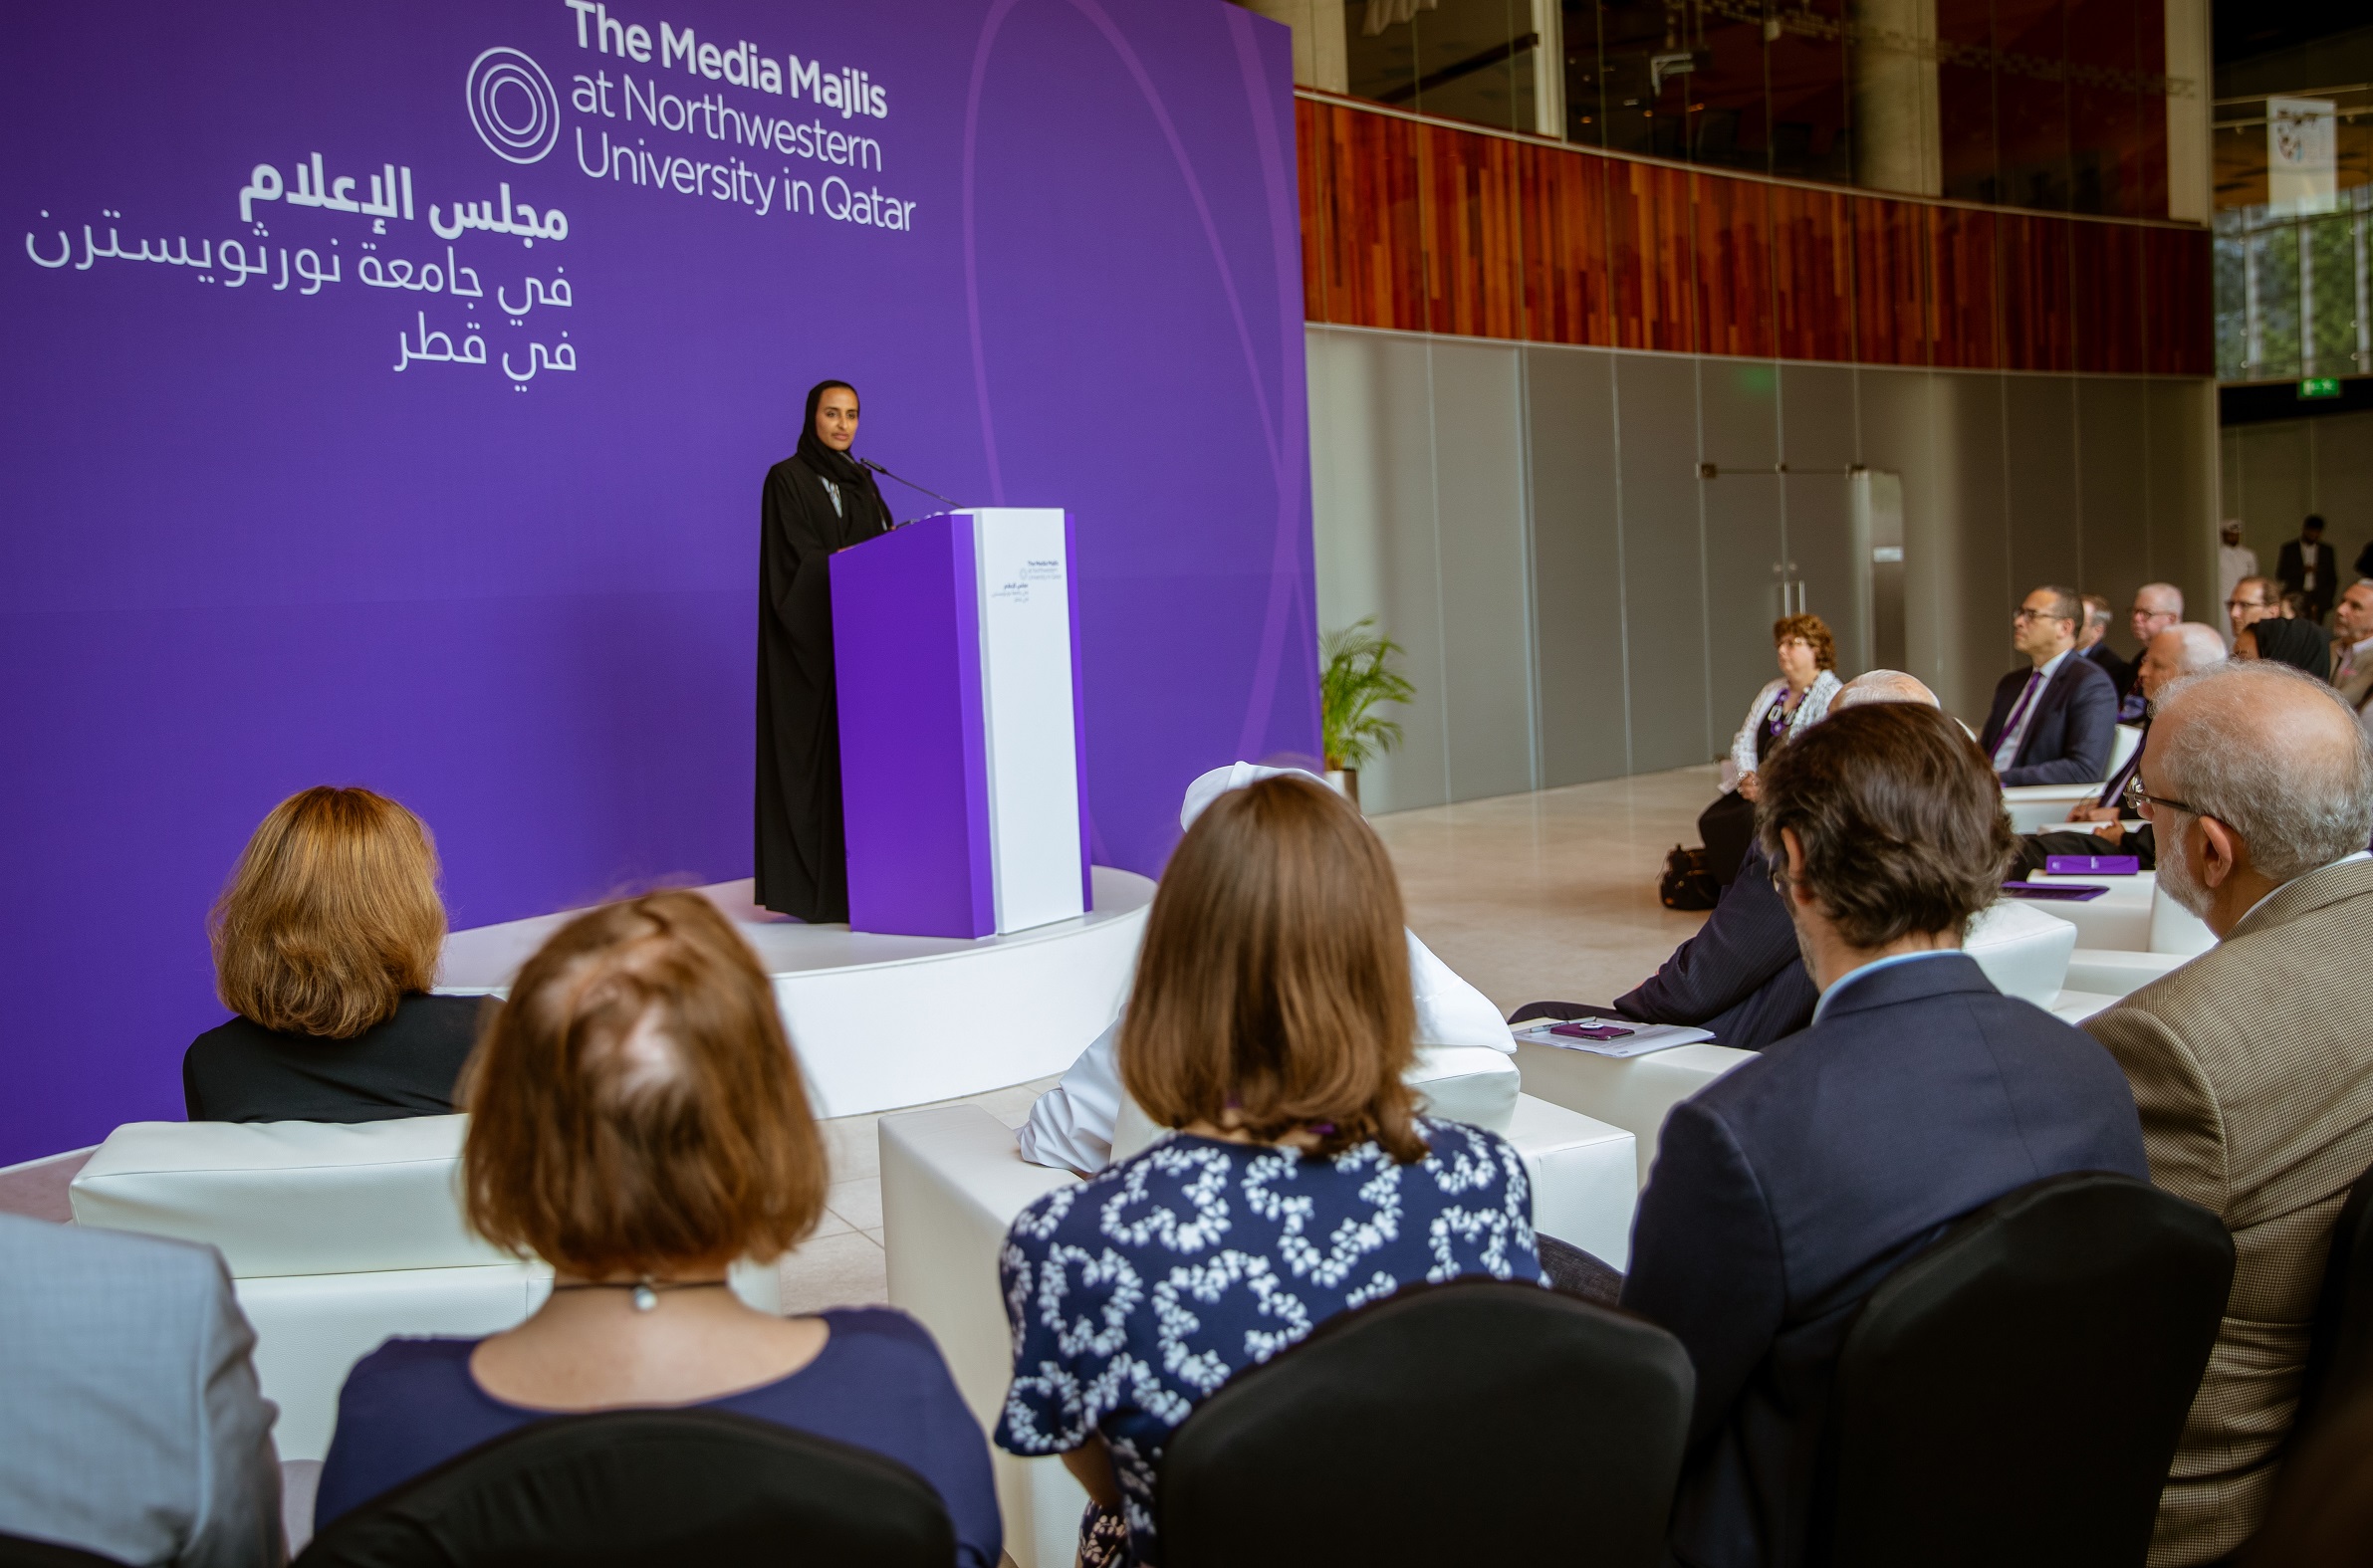 NU-Q dedicates The Media Majlis at Northwestern University in Qatar, the first museum on media in the region.